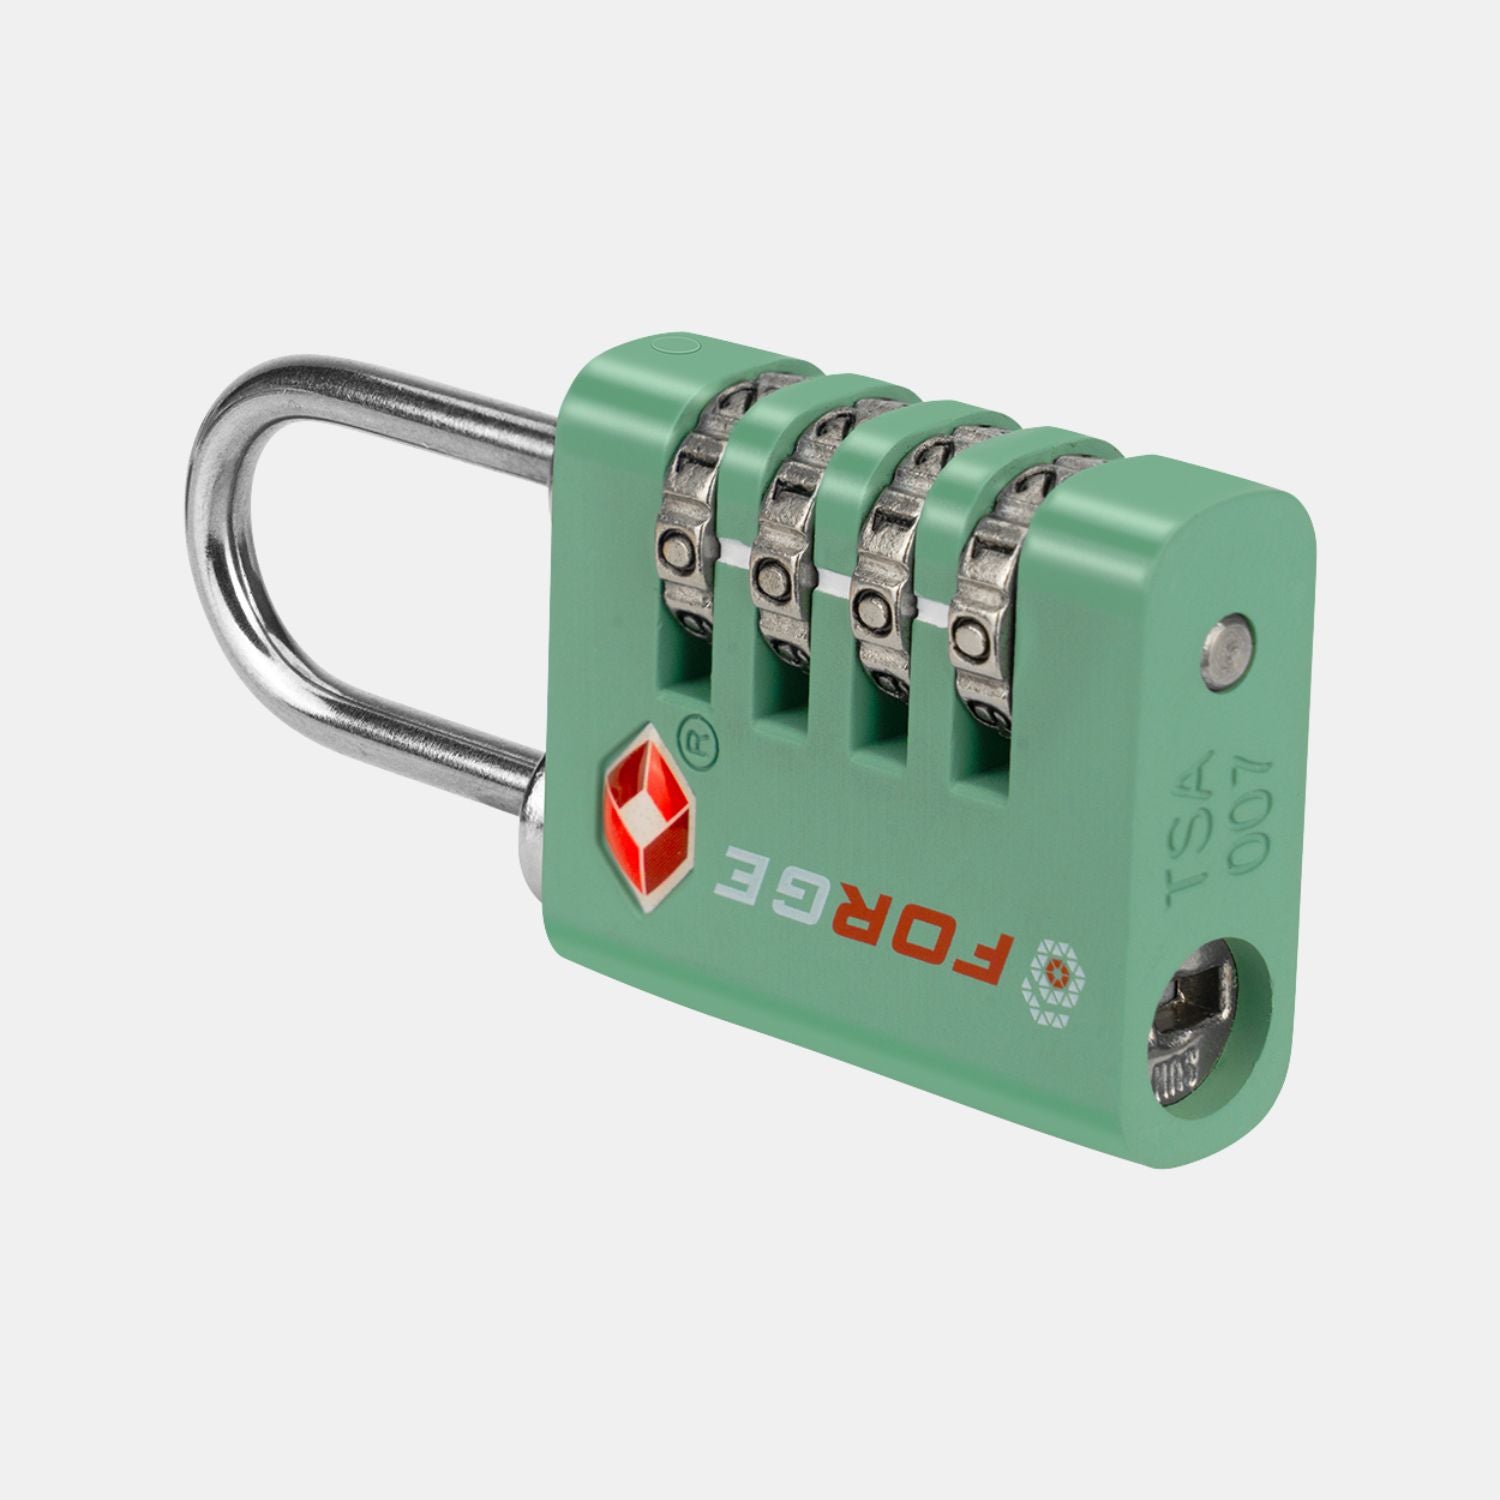 Dual-Opening TSA Approved Luggage Lock: Key or Combination Access, Heavy Duty. 2 Green Locks